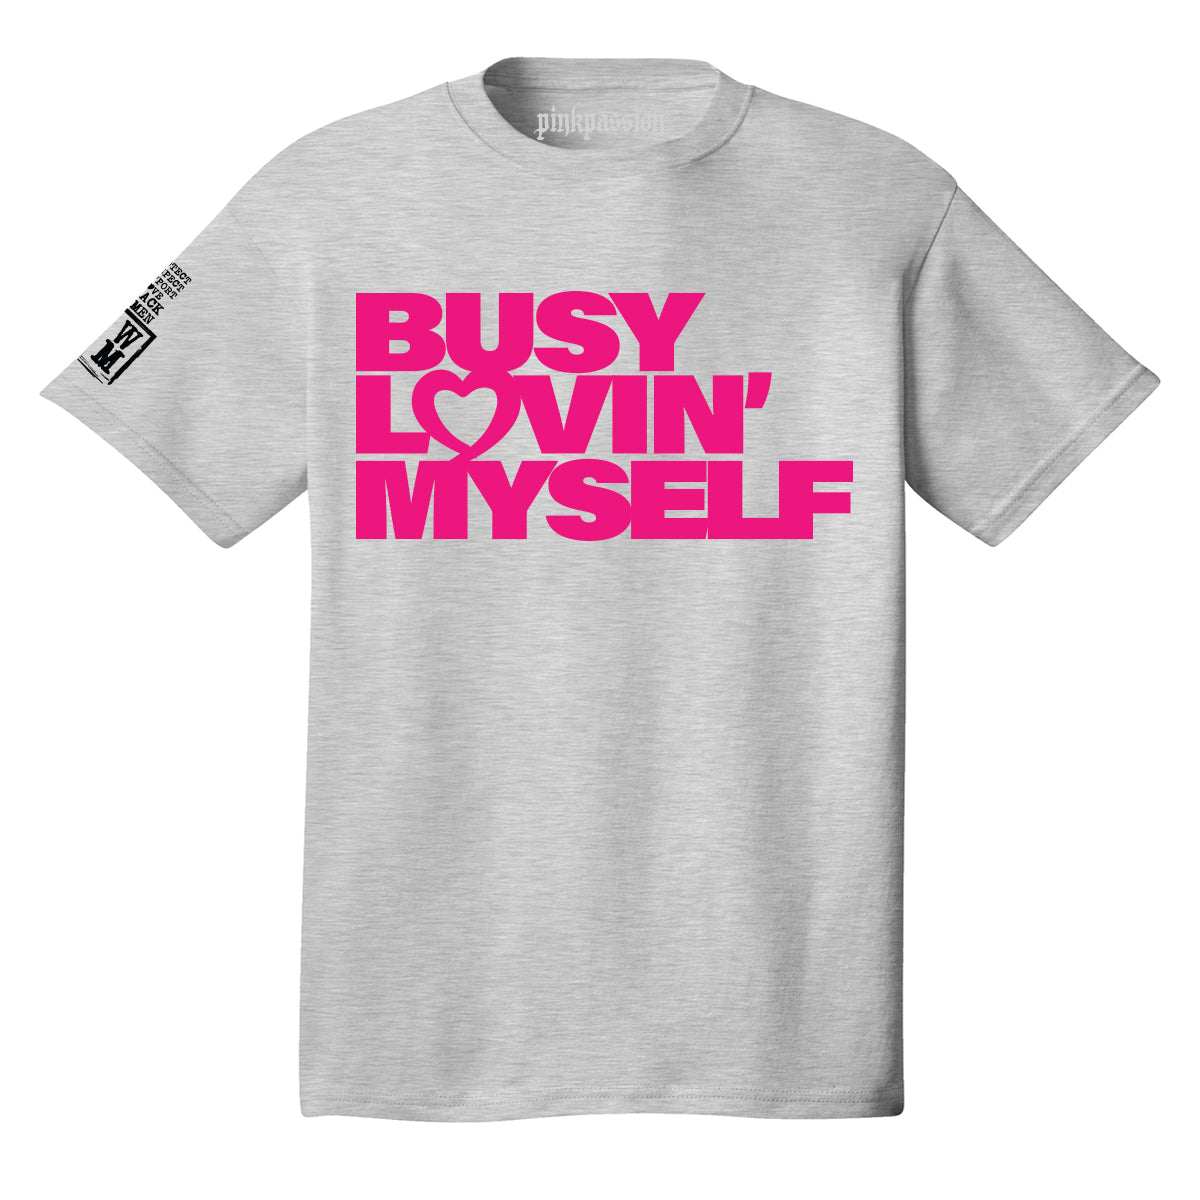 Busy Lovin' Myself T-shirt (Unisex)